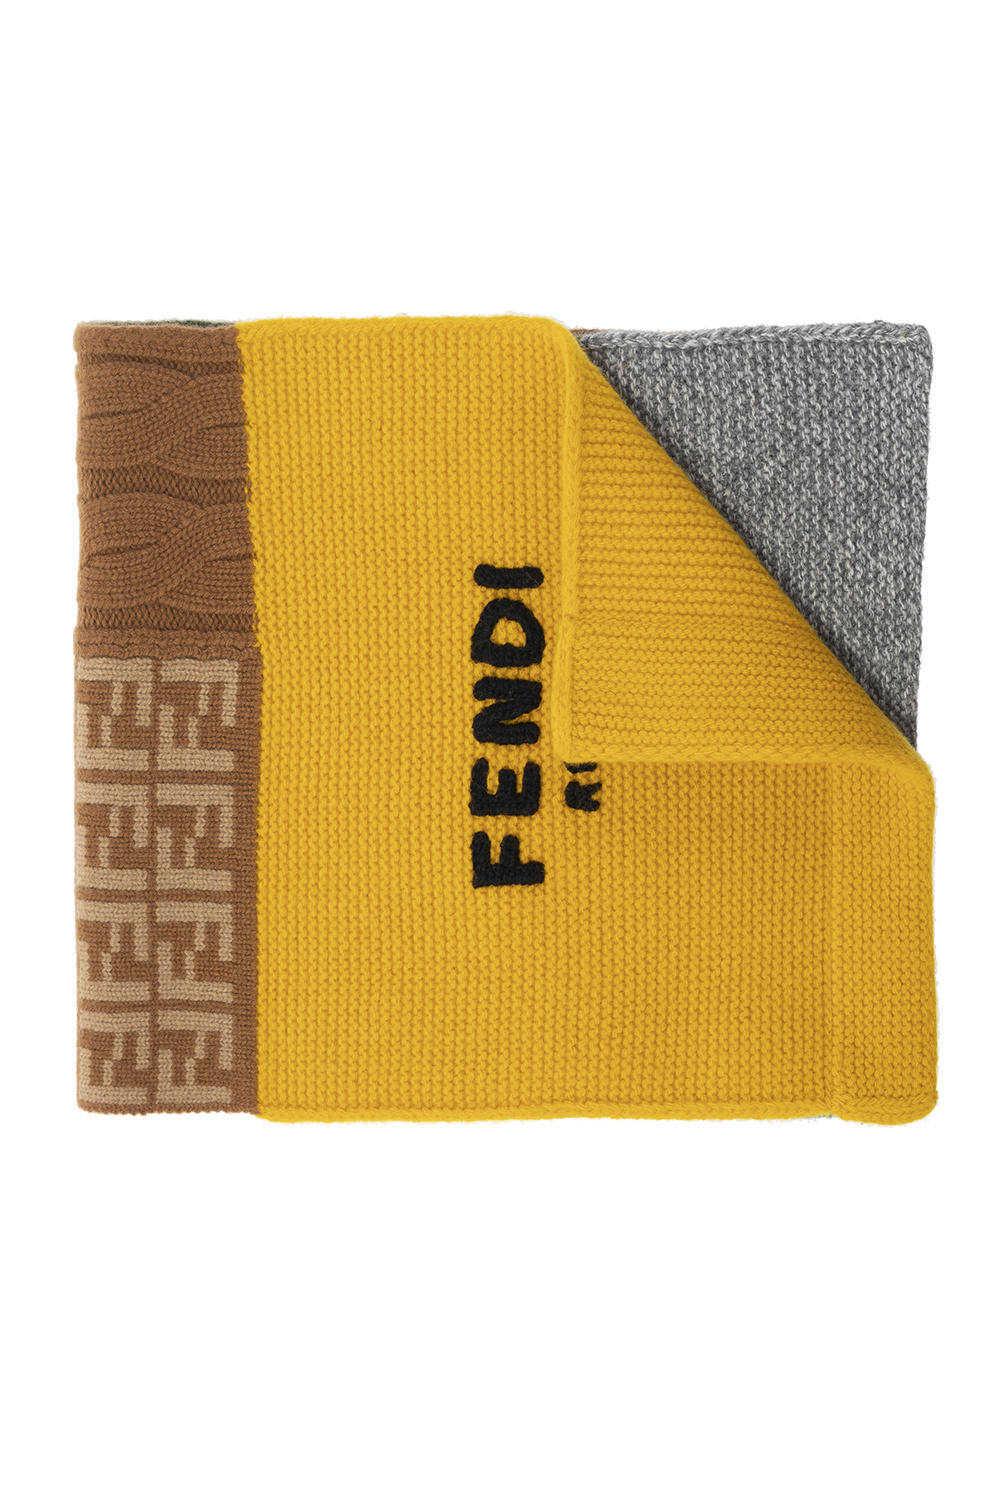 Fendi Kids Patterned scarf